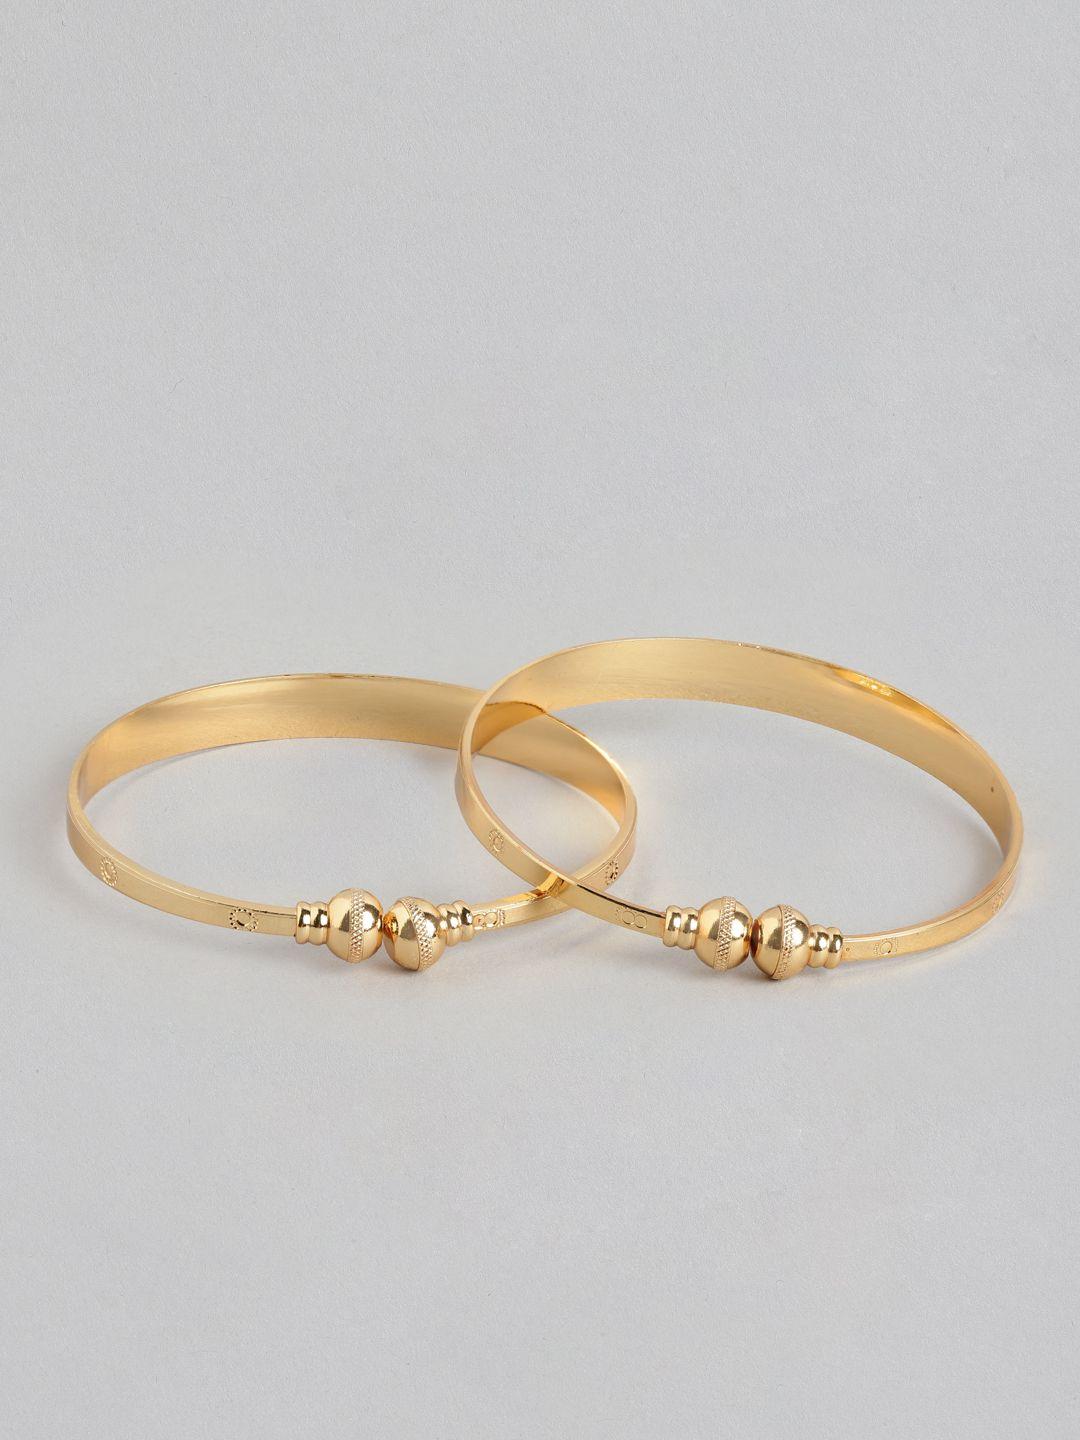 aadvik designs set of 2 gold-plated adjustable bangles